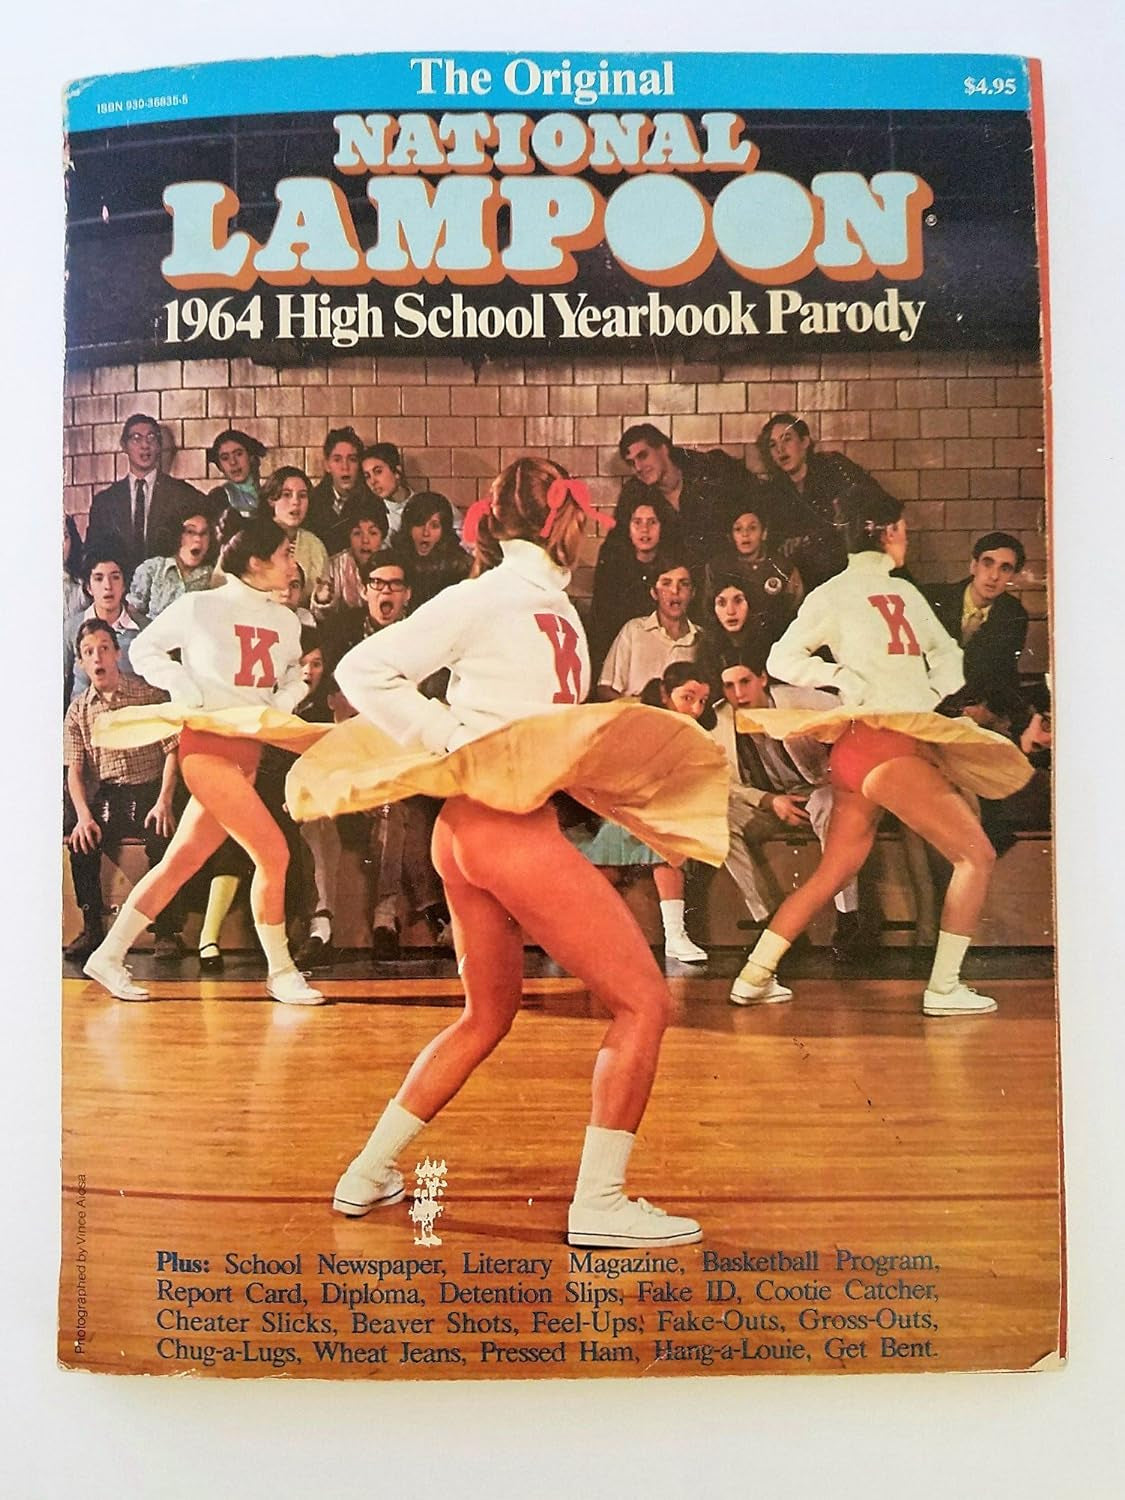 The Original National Lampoon 1964 High School Yearbook Parody